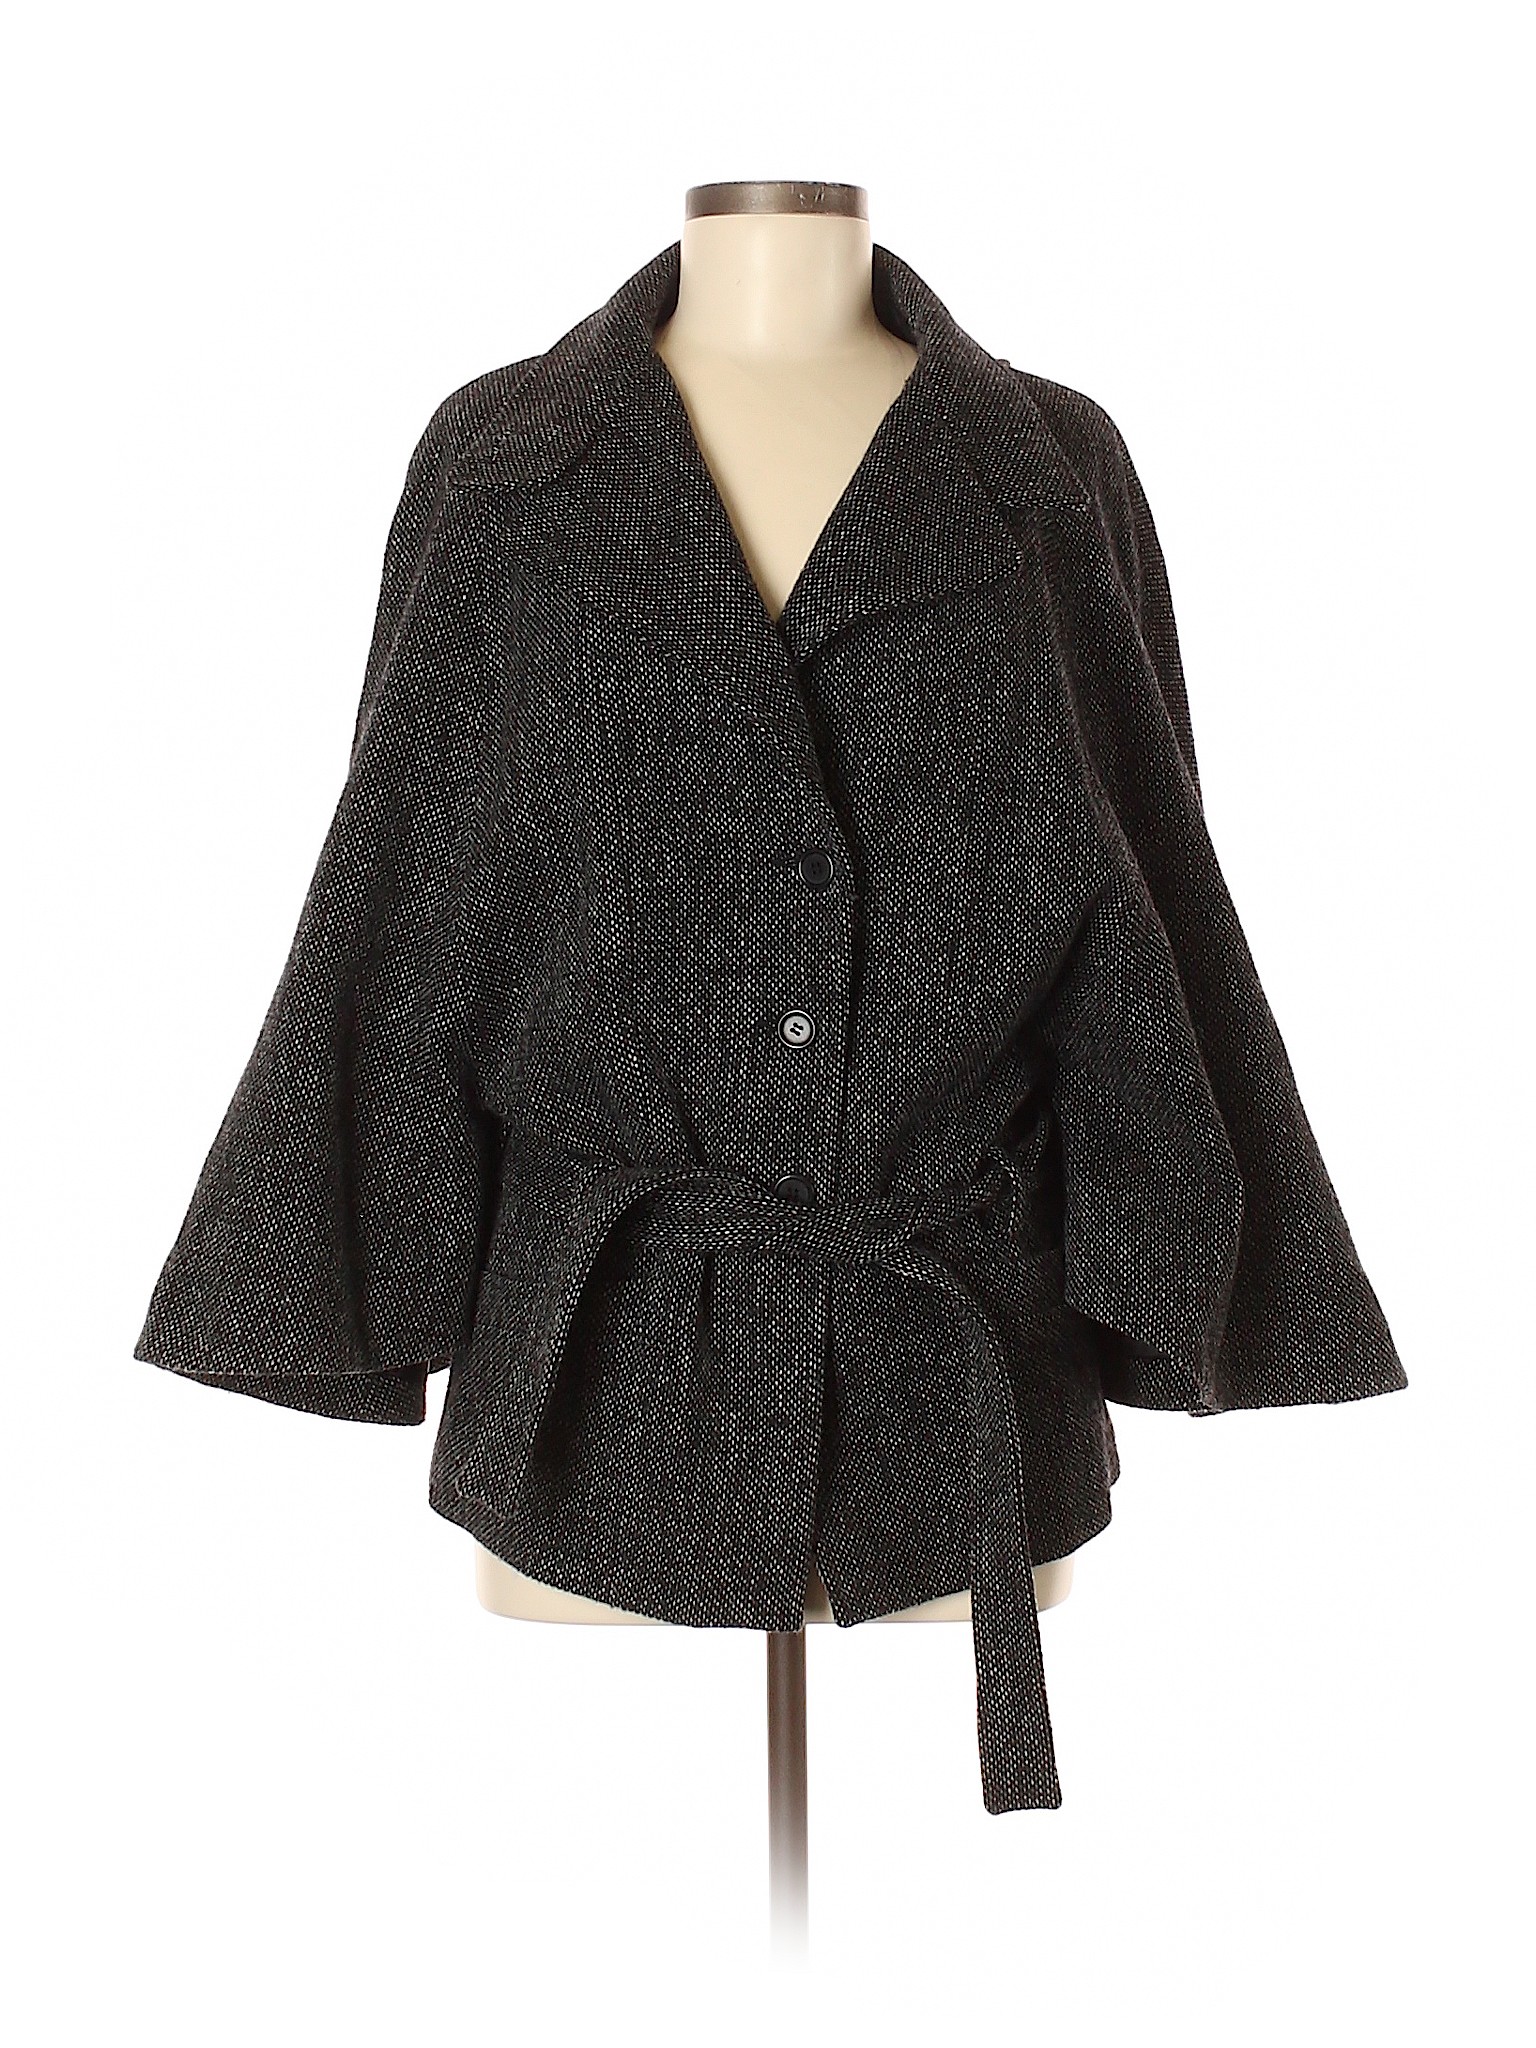 Vanessa Bruno Athe Solid Black Wool Coat Size 38 (EU) - 84% off | thredUP